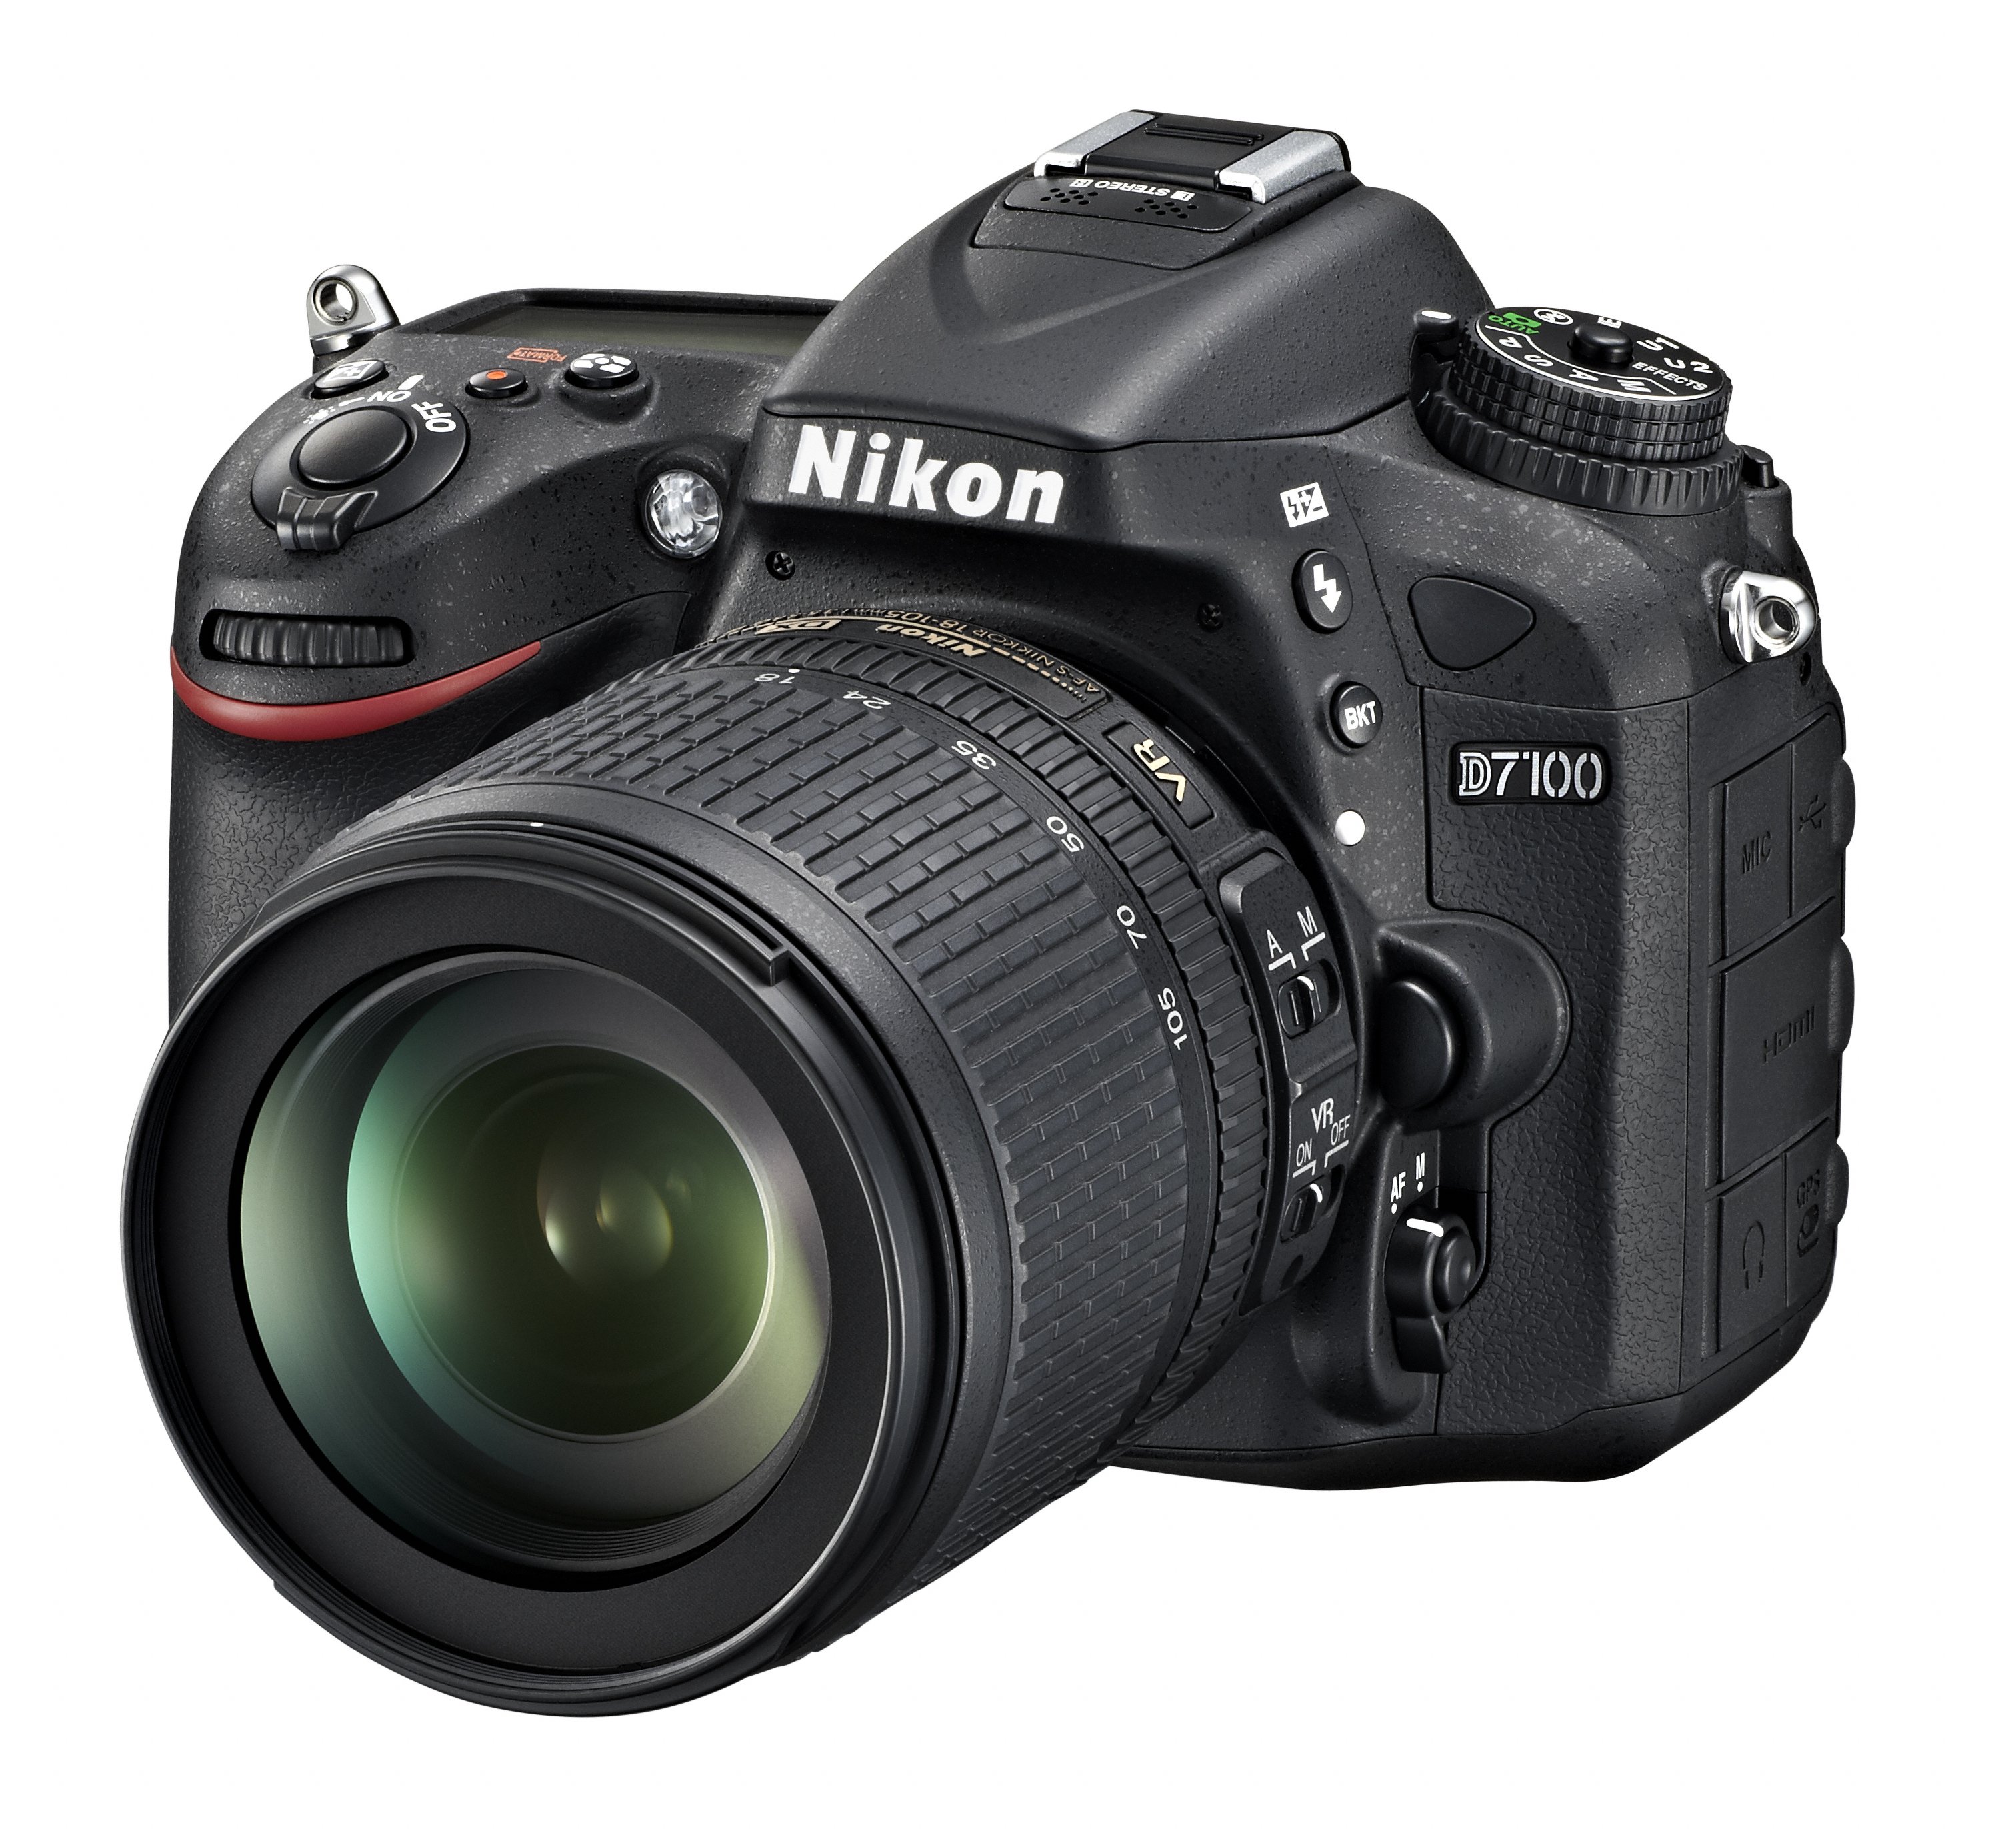 Sistem Autofocus yang ada di Nikon D7000 diperbaharui untuk menghasilkan kualitas gambar yang lebih jelas terlebih untuk object yang bergerak dengan